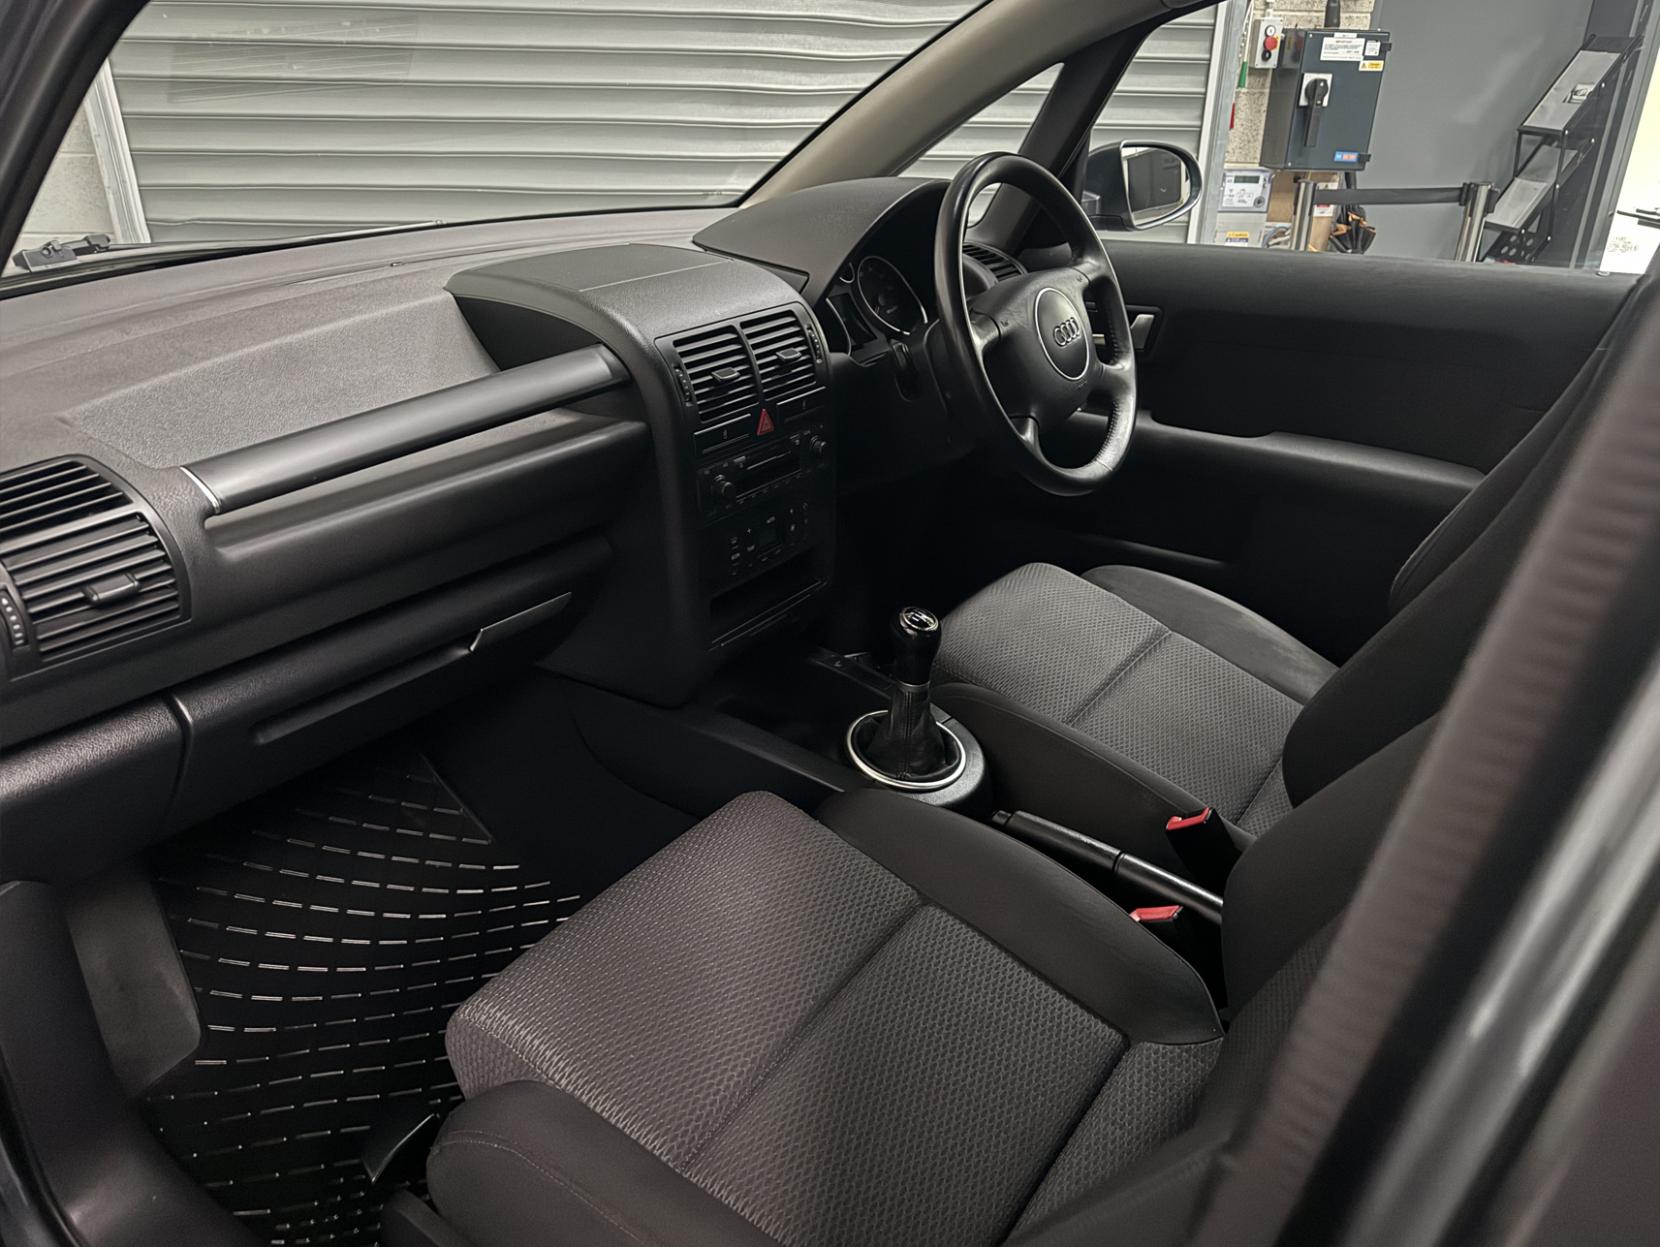 Audi A2 1.4 TDI SE Hatchback 5dr Diesel Manual (119 g/km, 75 bhp)